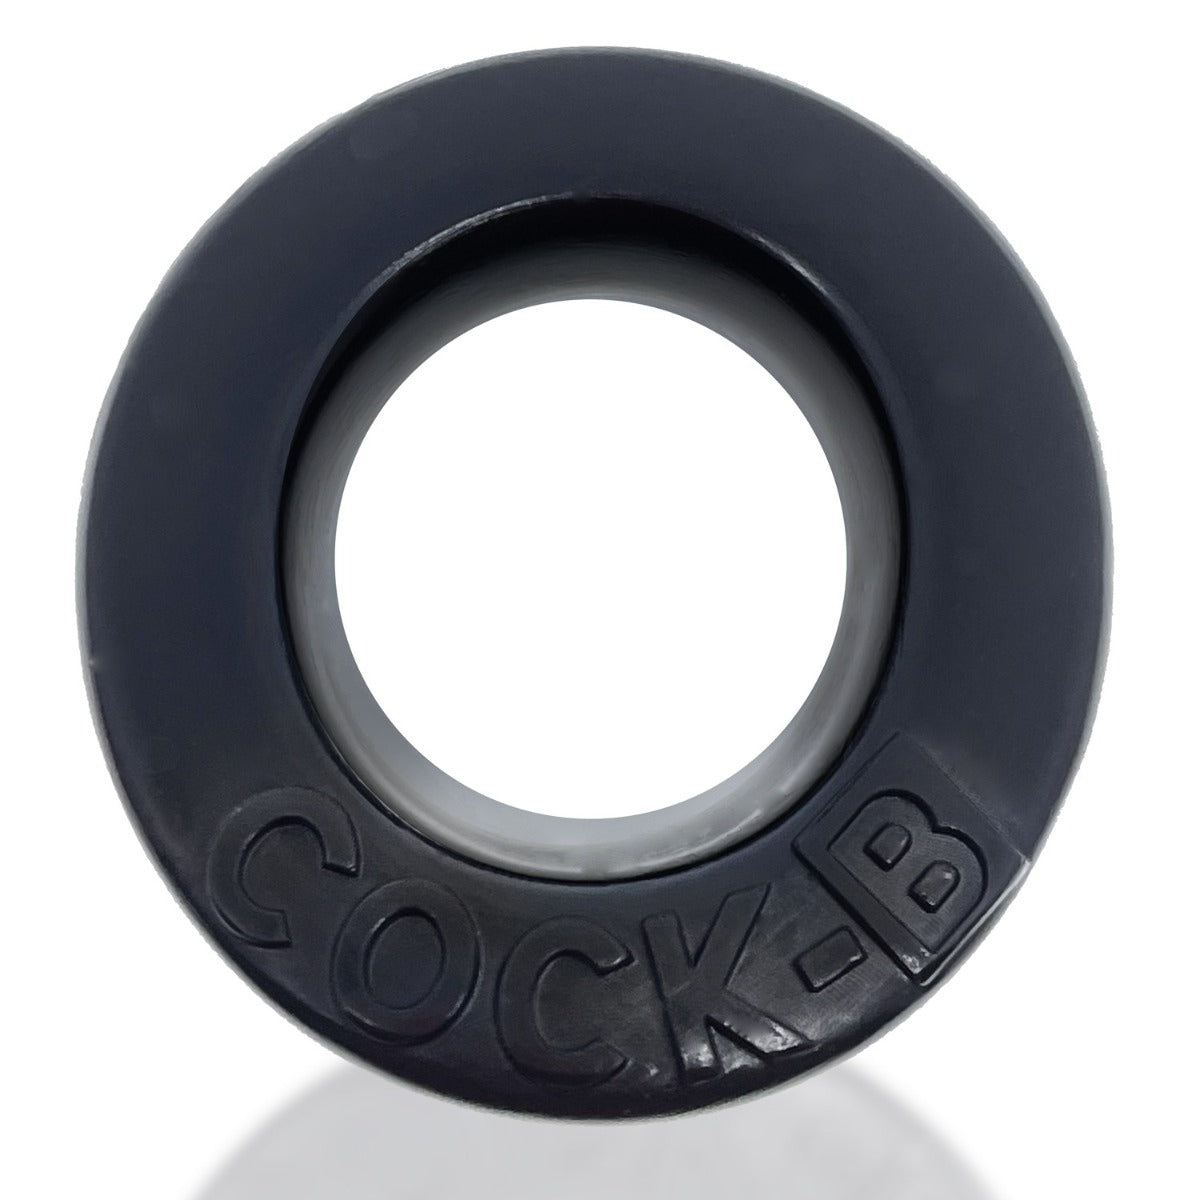 Oxballs Cock B Bulge Cock Ring Black